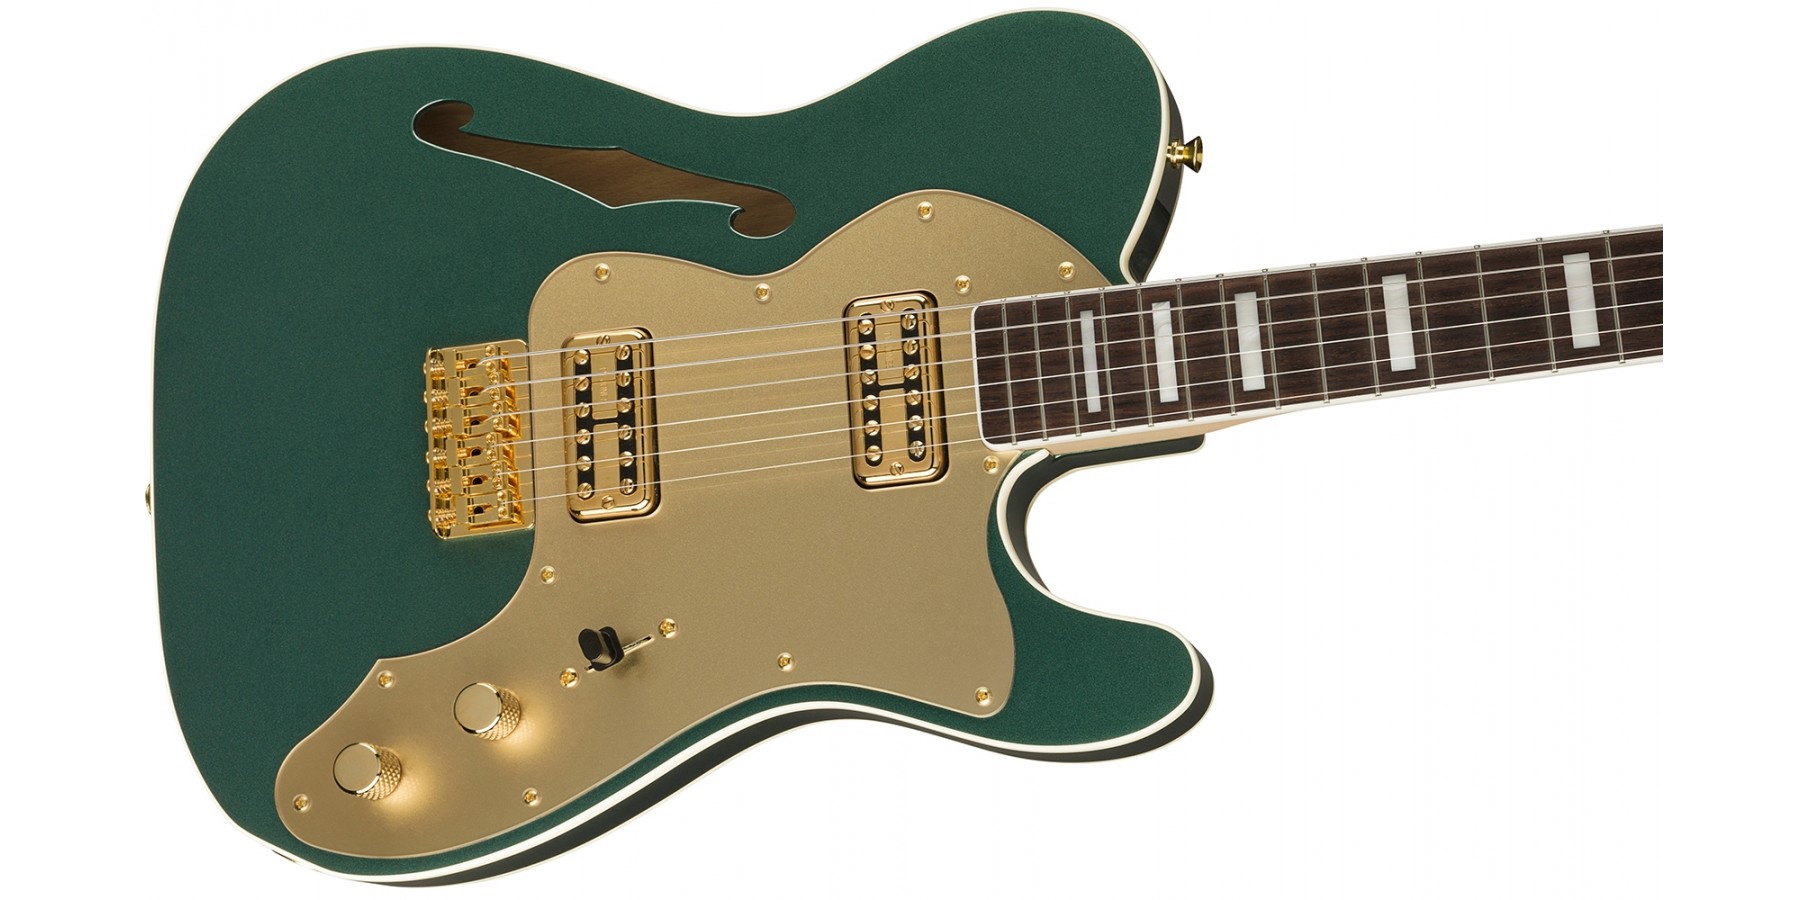 Fender MIJ Limited Edition Super Deluxe Thinline Telecaster Sherwood Green Metallic